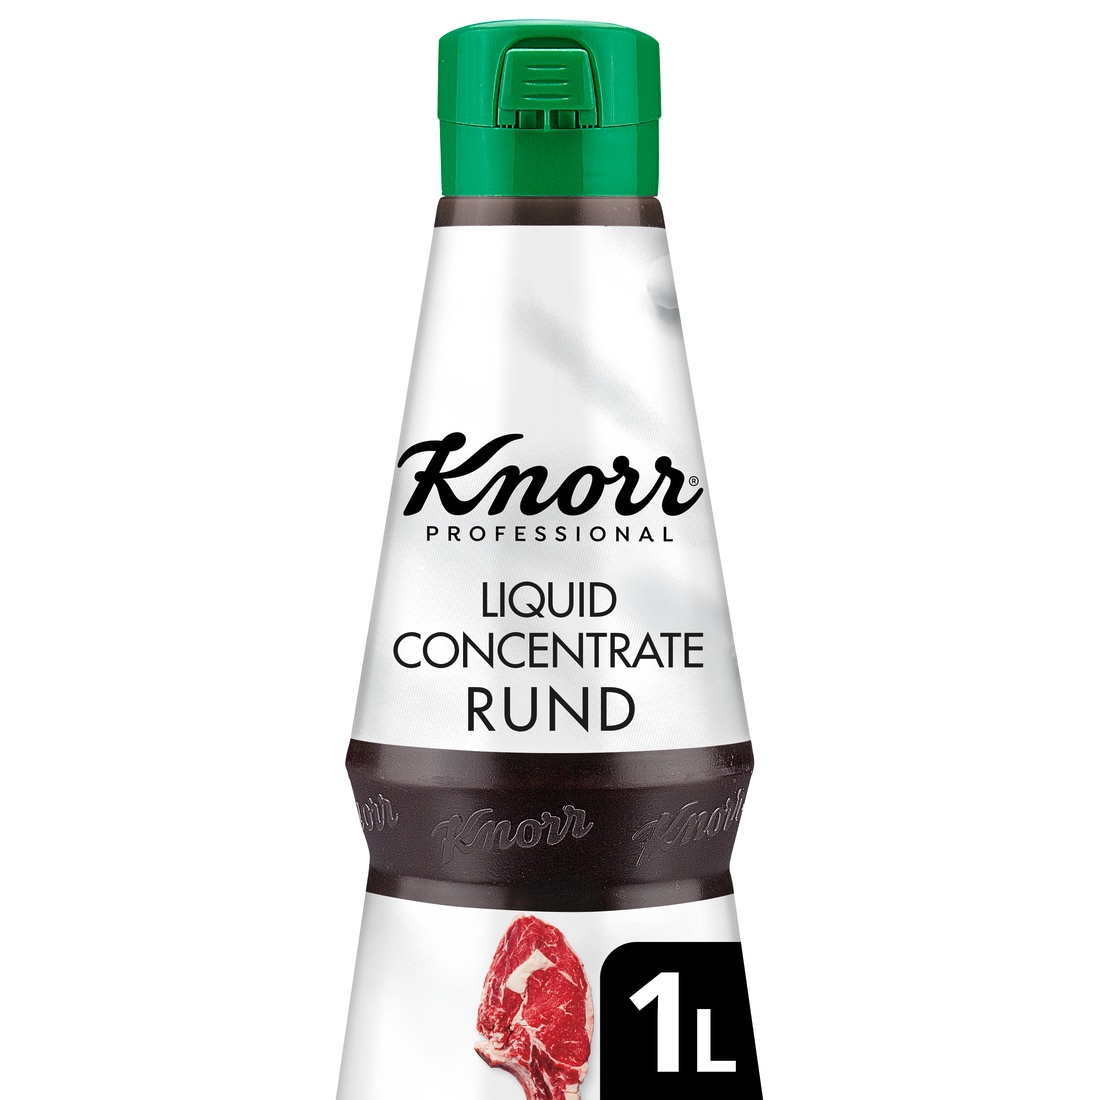 Knorr Professional Liquid Concentrate Rund 1L - 